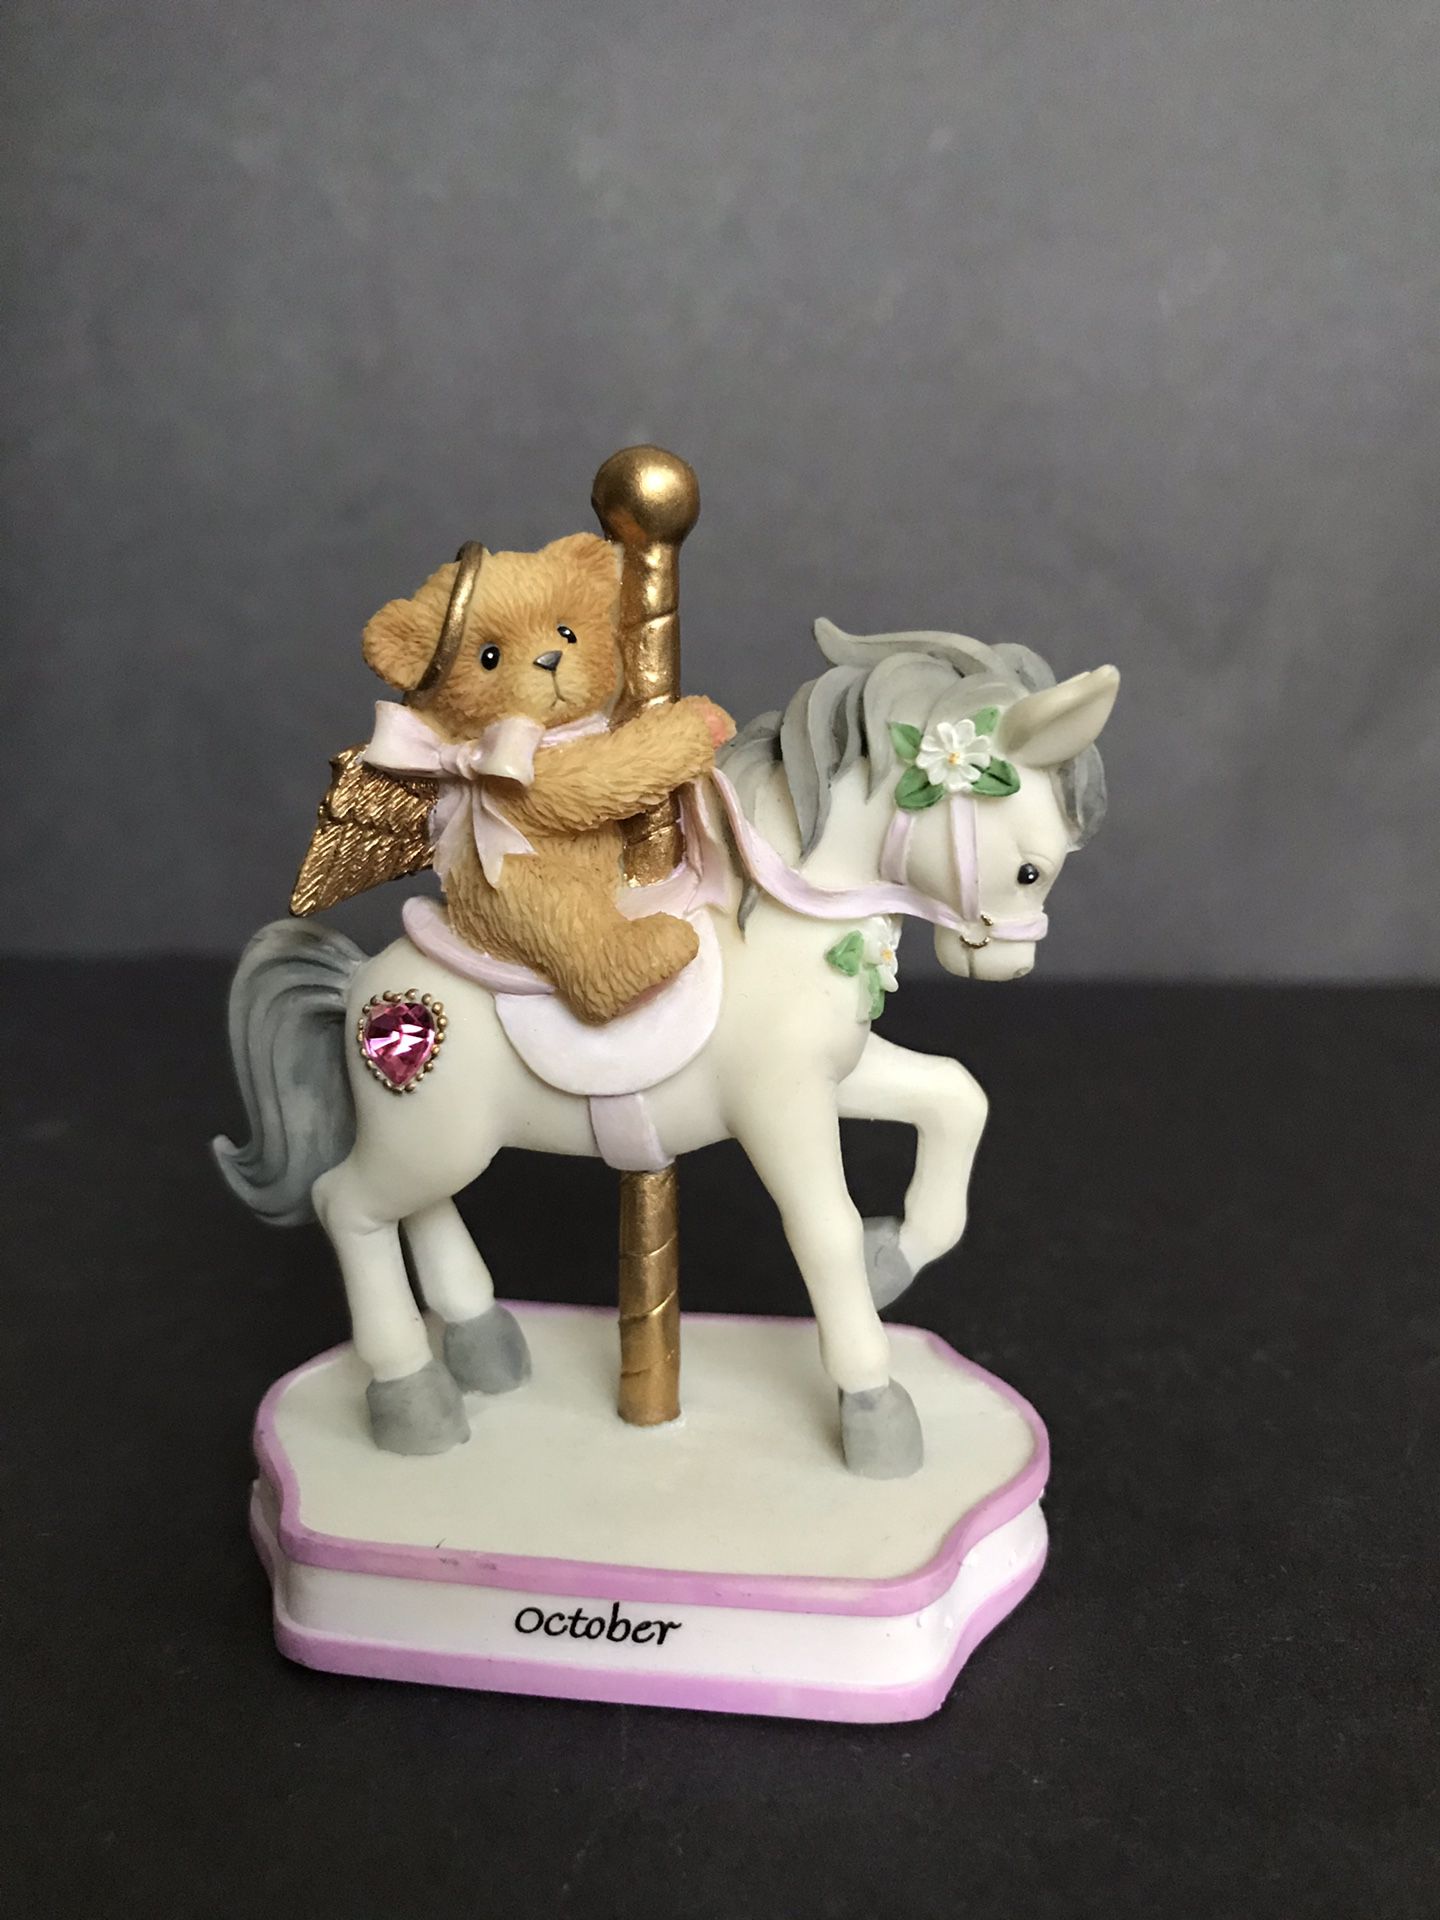 Cherished Teddies October Monthly Carousel Figurine